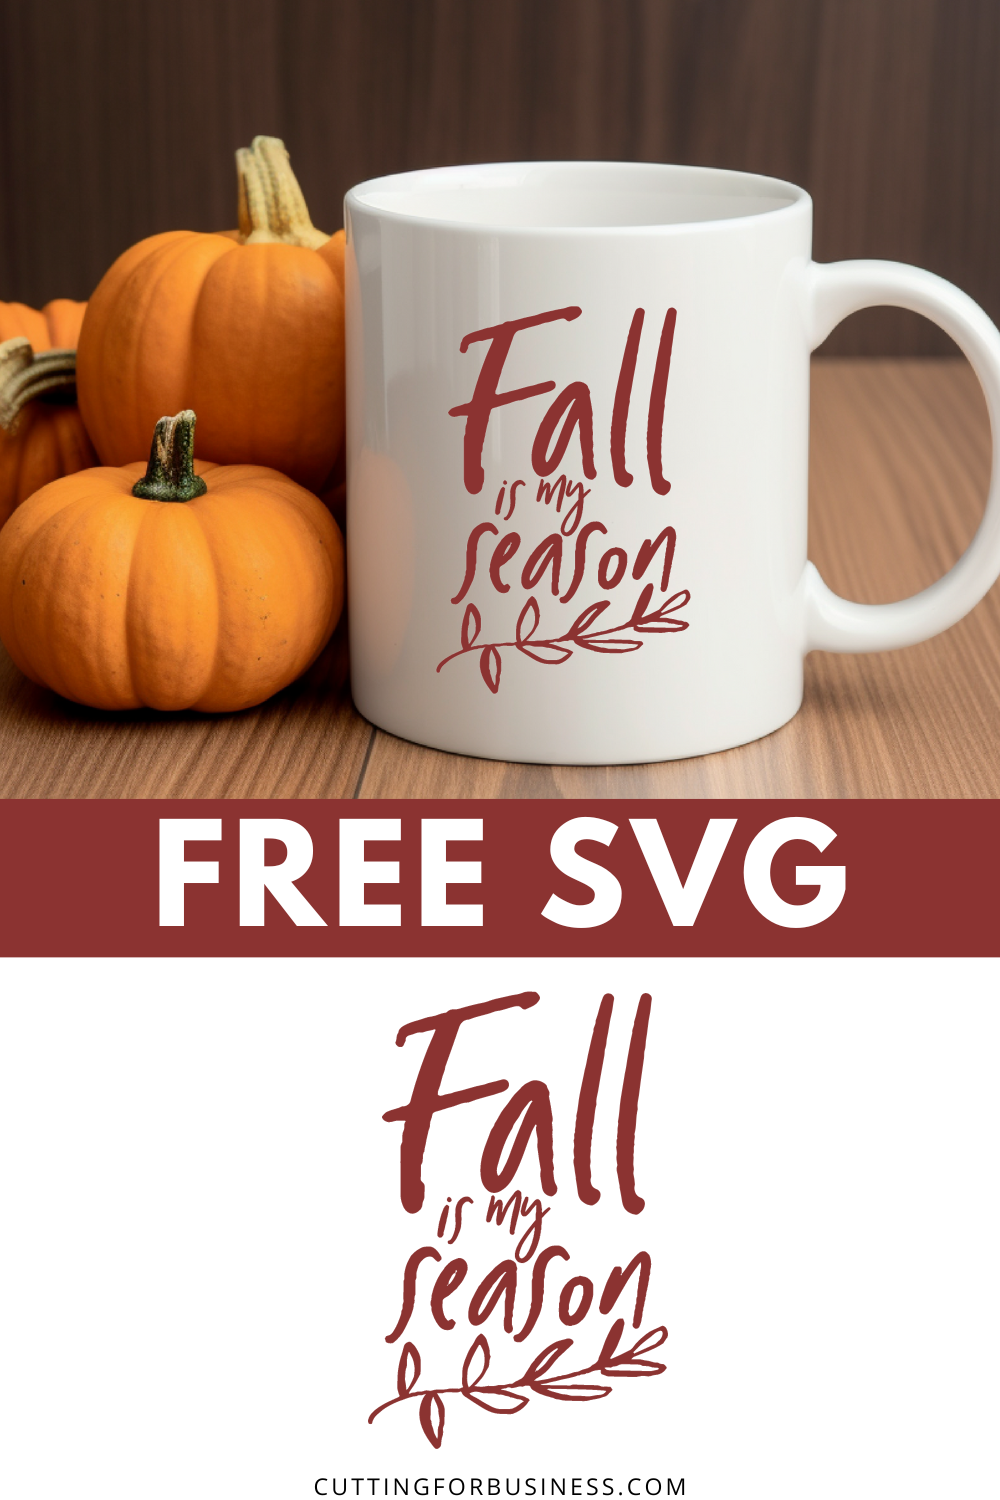 Free Fall is My Season SVG Cut File - cuttingforbusiness.com